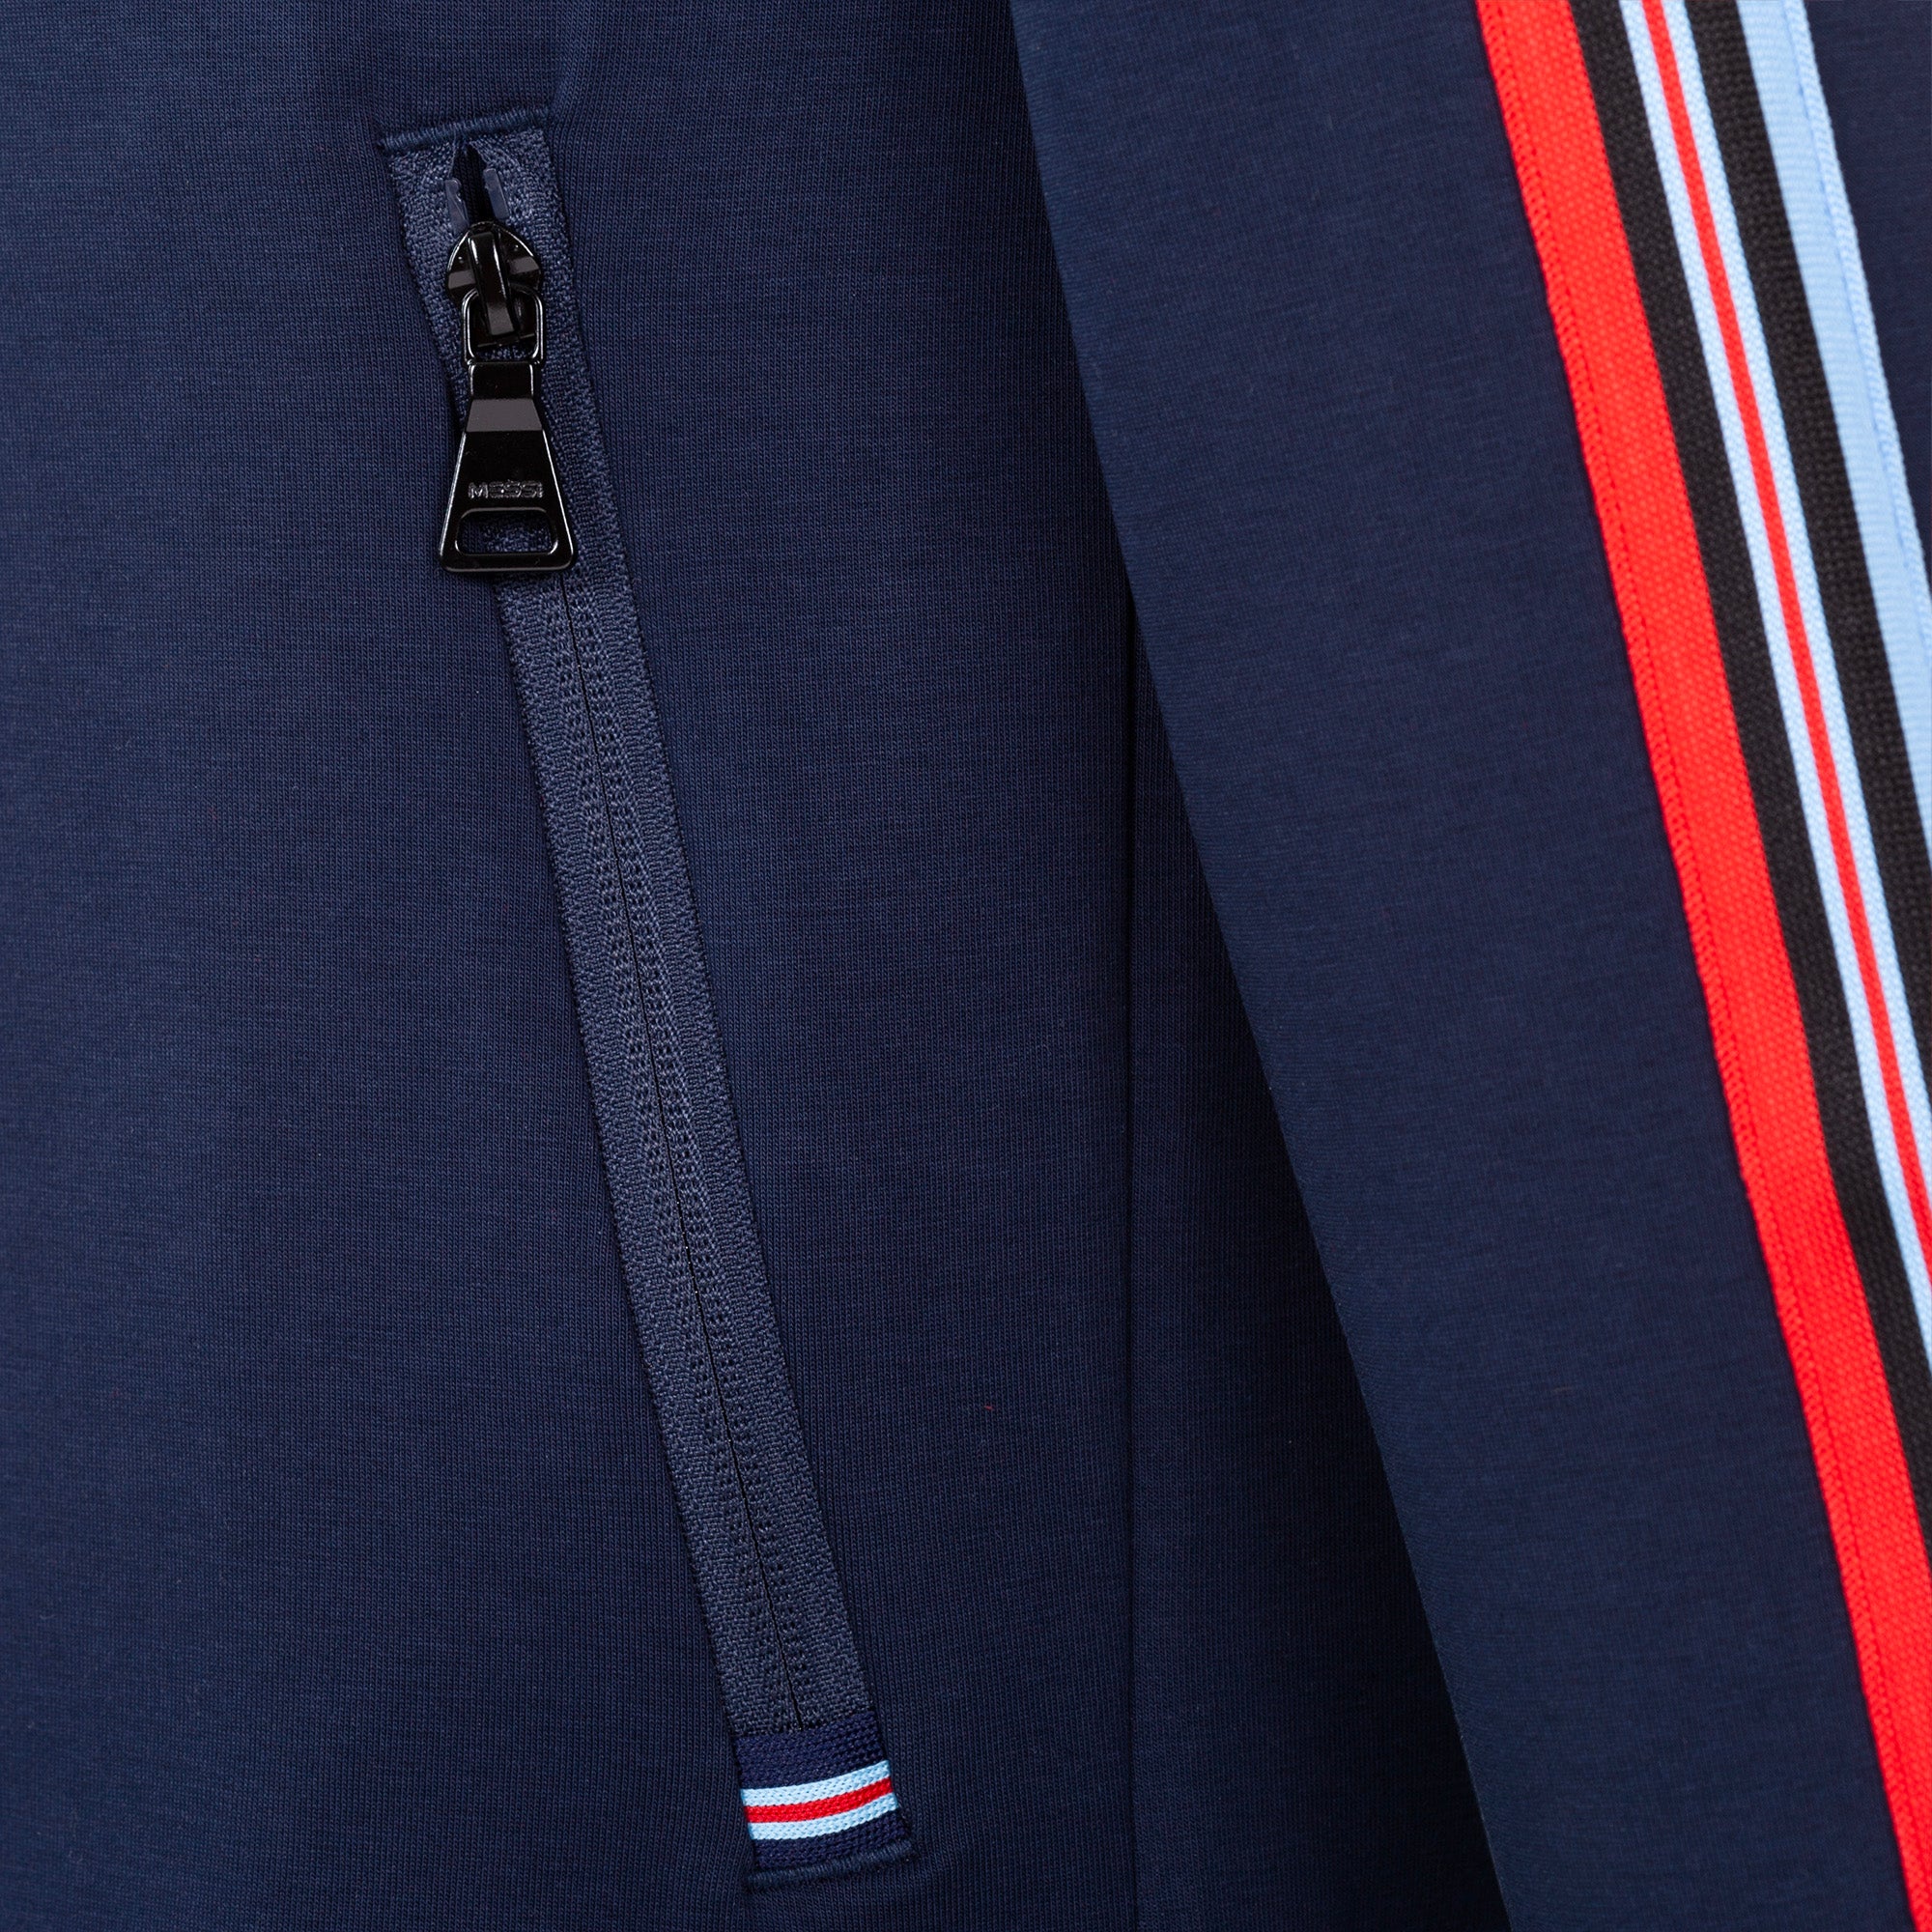 Messi Two Way Zip Knit Jacket - Navy